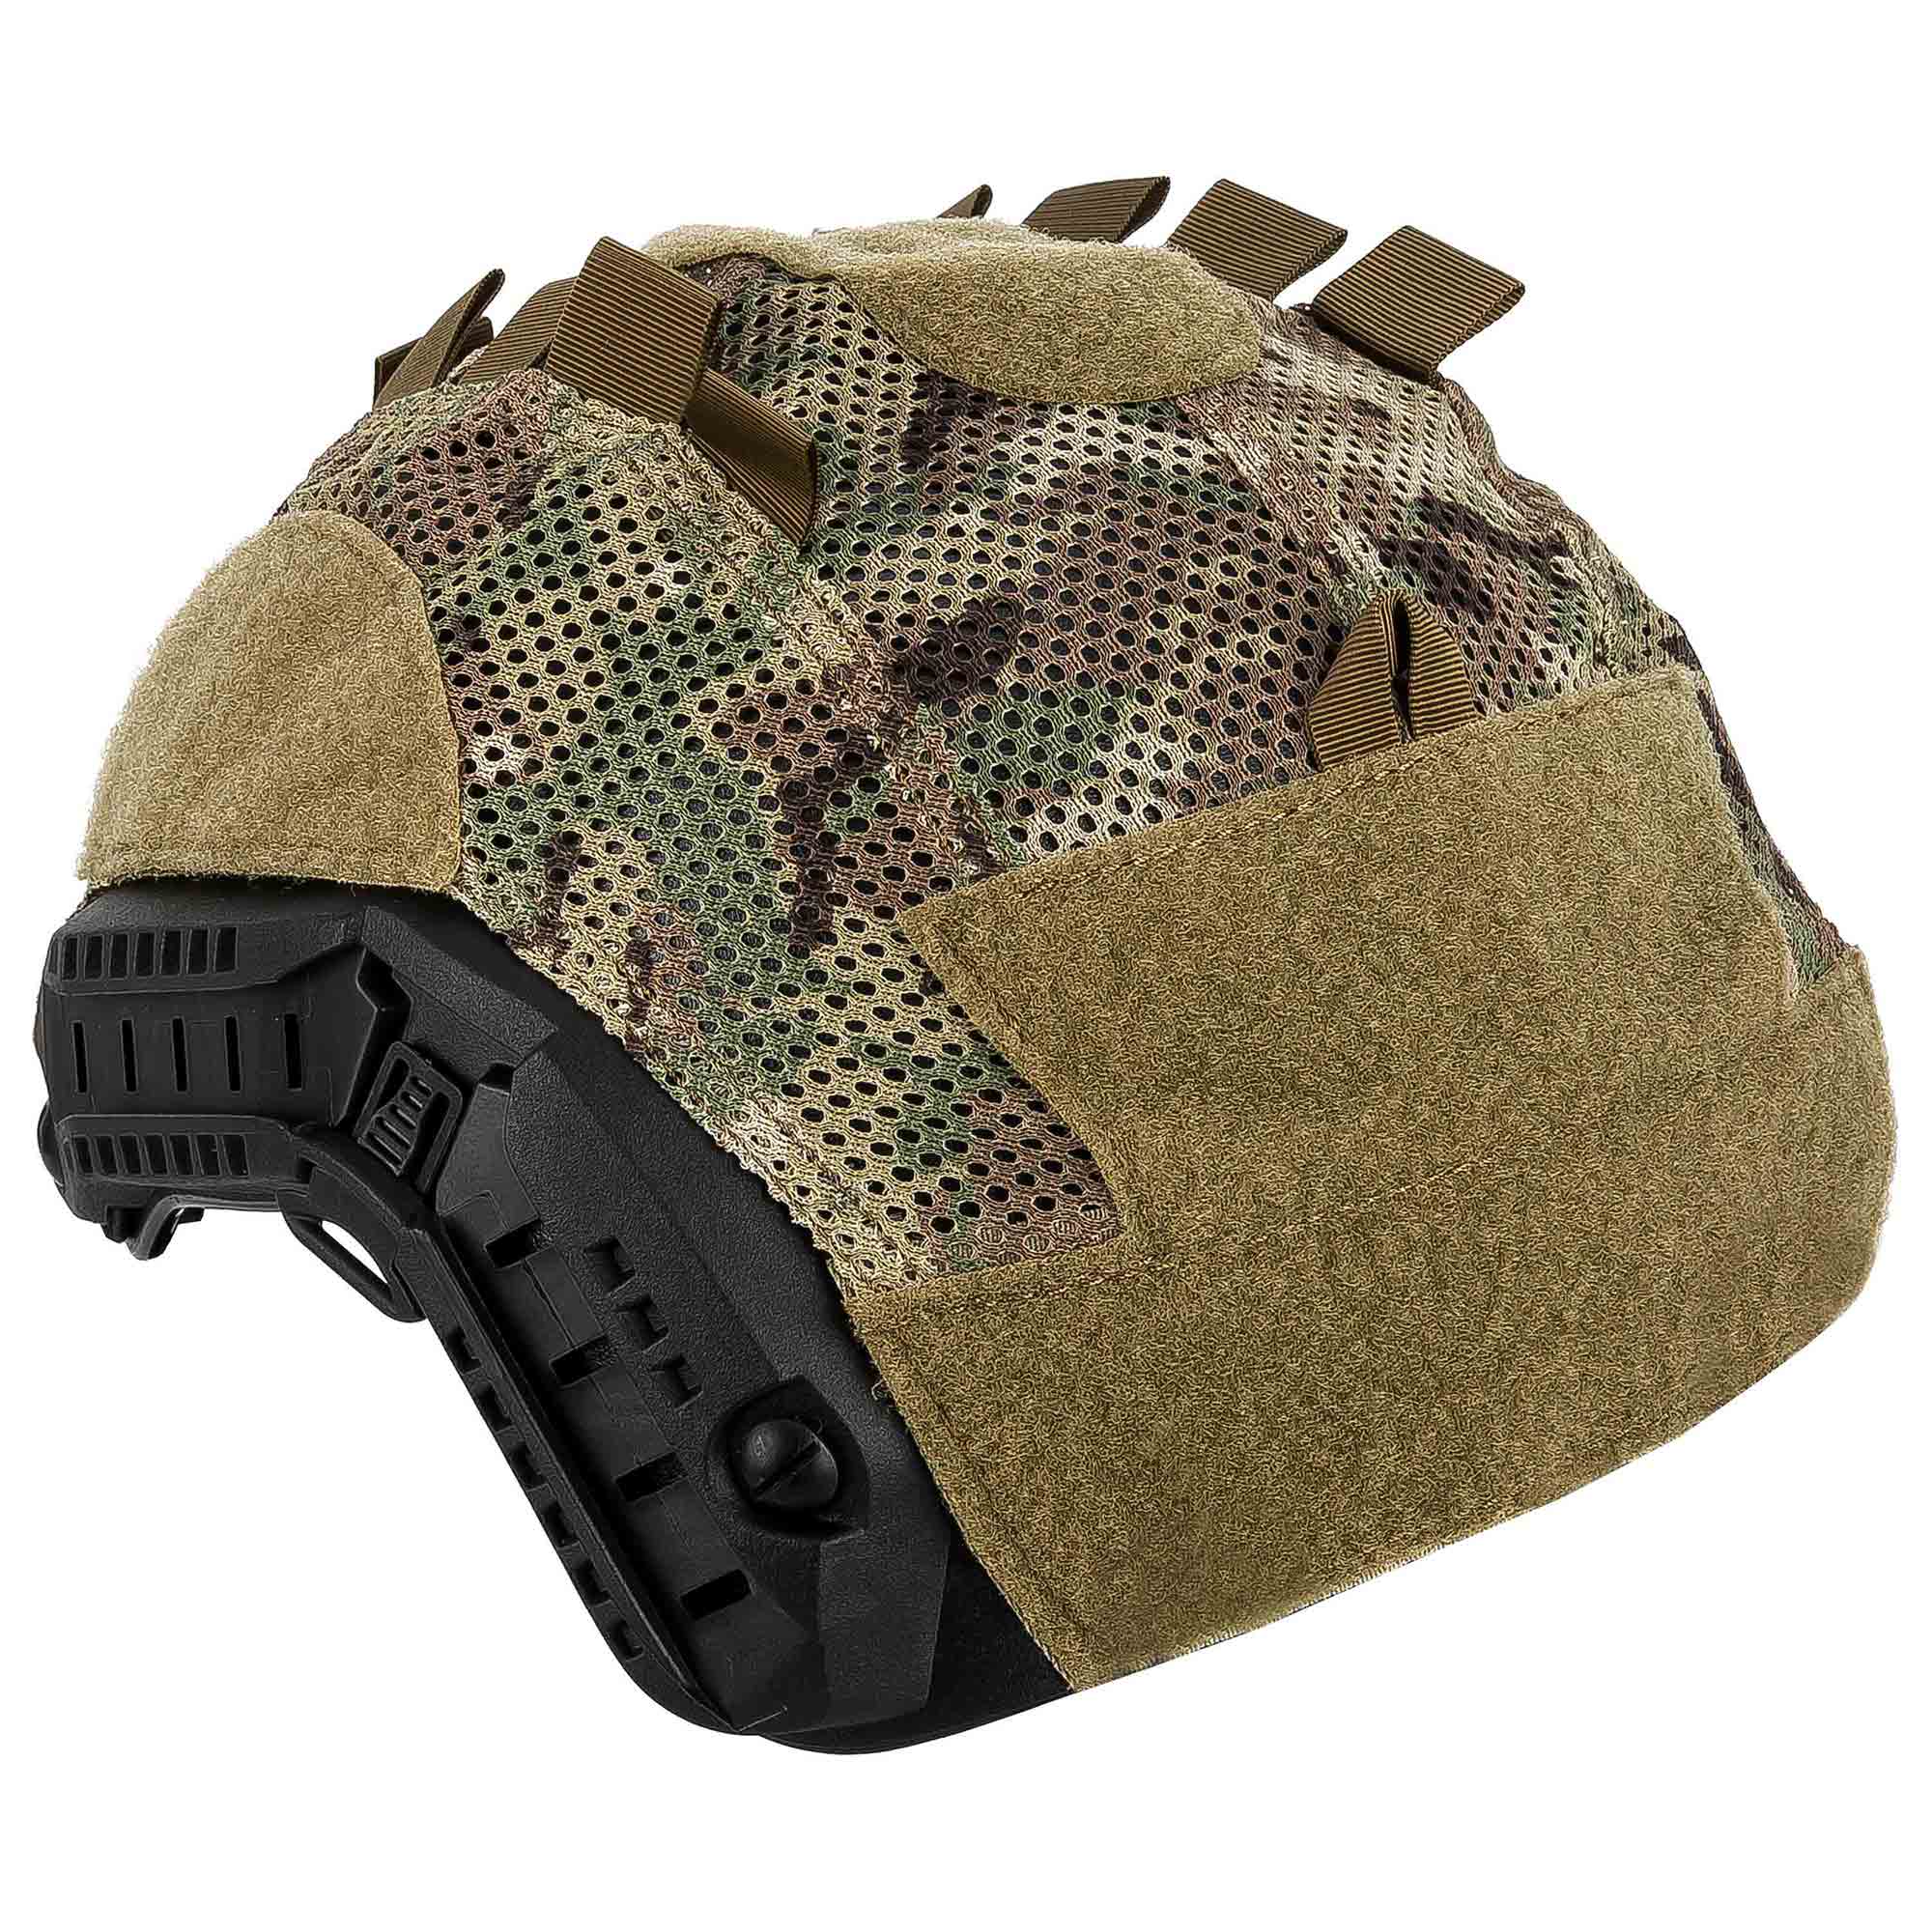 FMA Helmcover Ballistic Helmet Cover L multicam